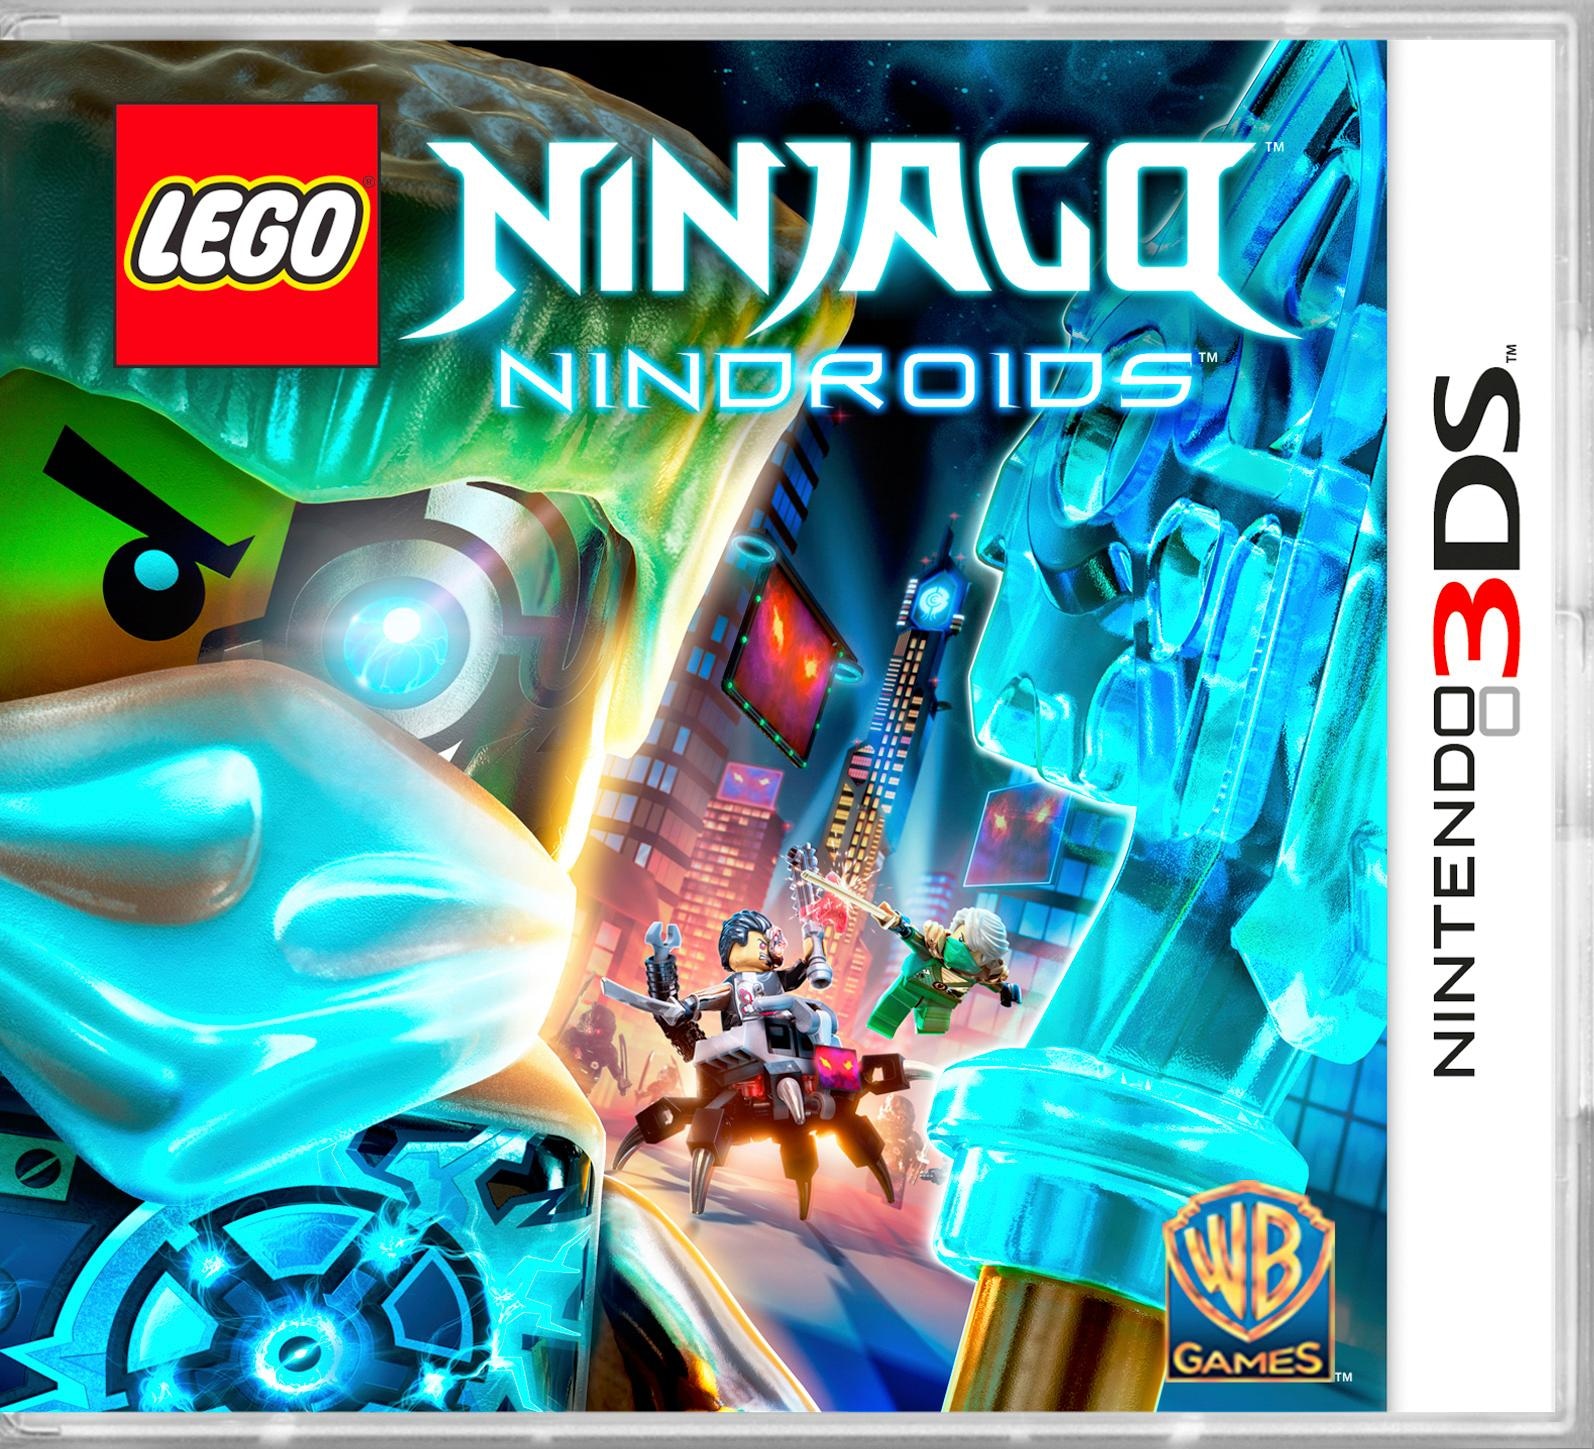 BAUR | 3DS, Nindroids«, Ninjago Nintendo Games Warner Spielesoftware »Lego Software Pyramide